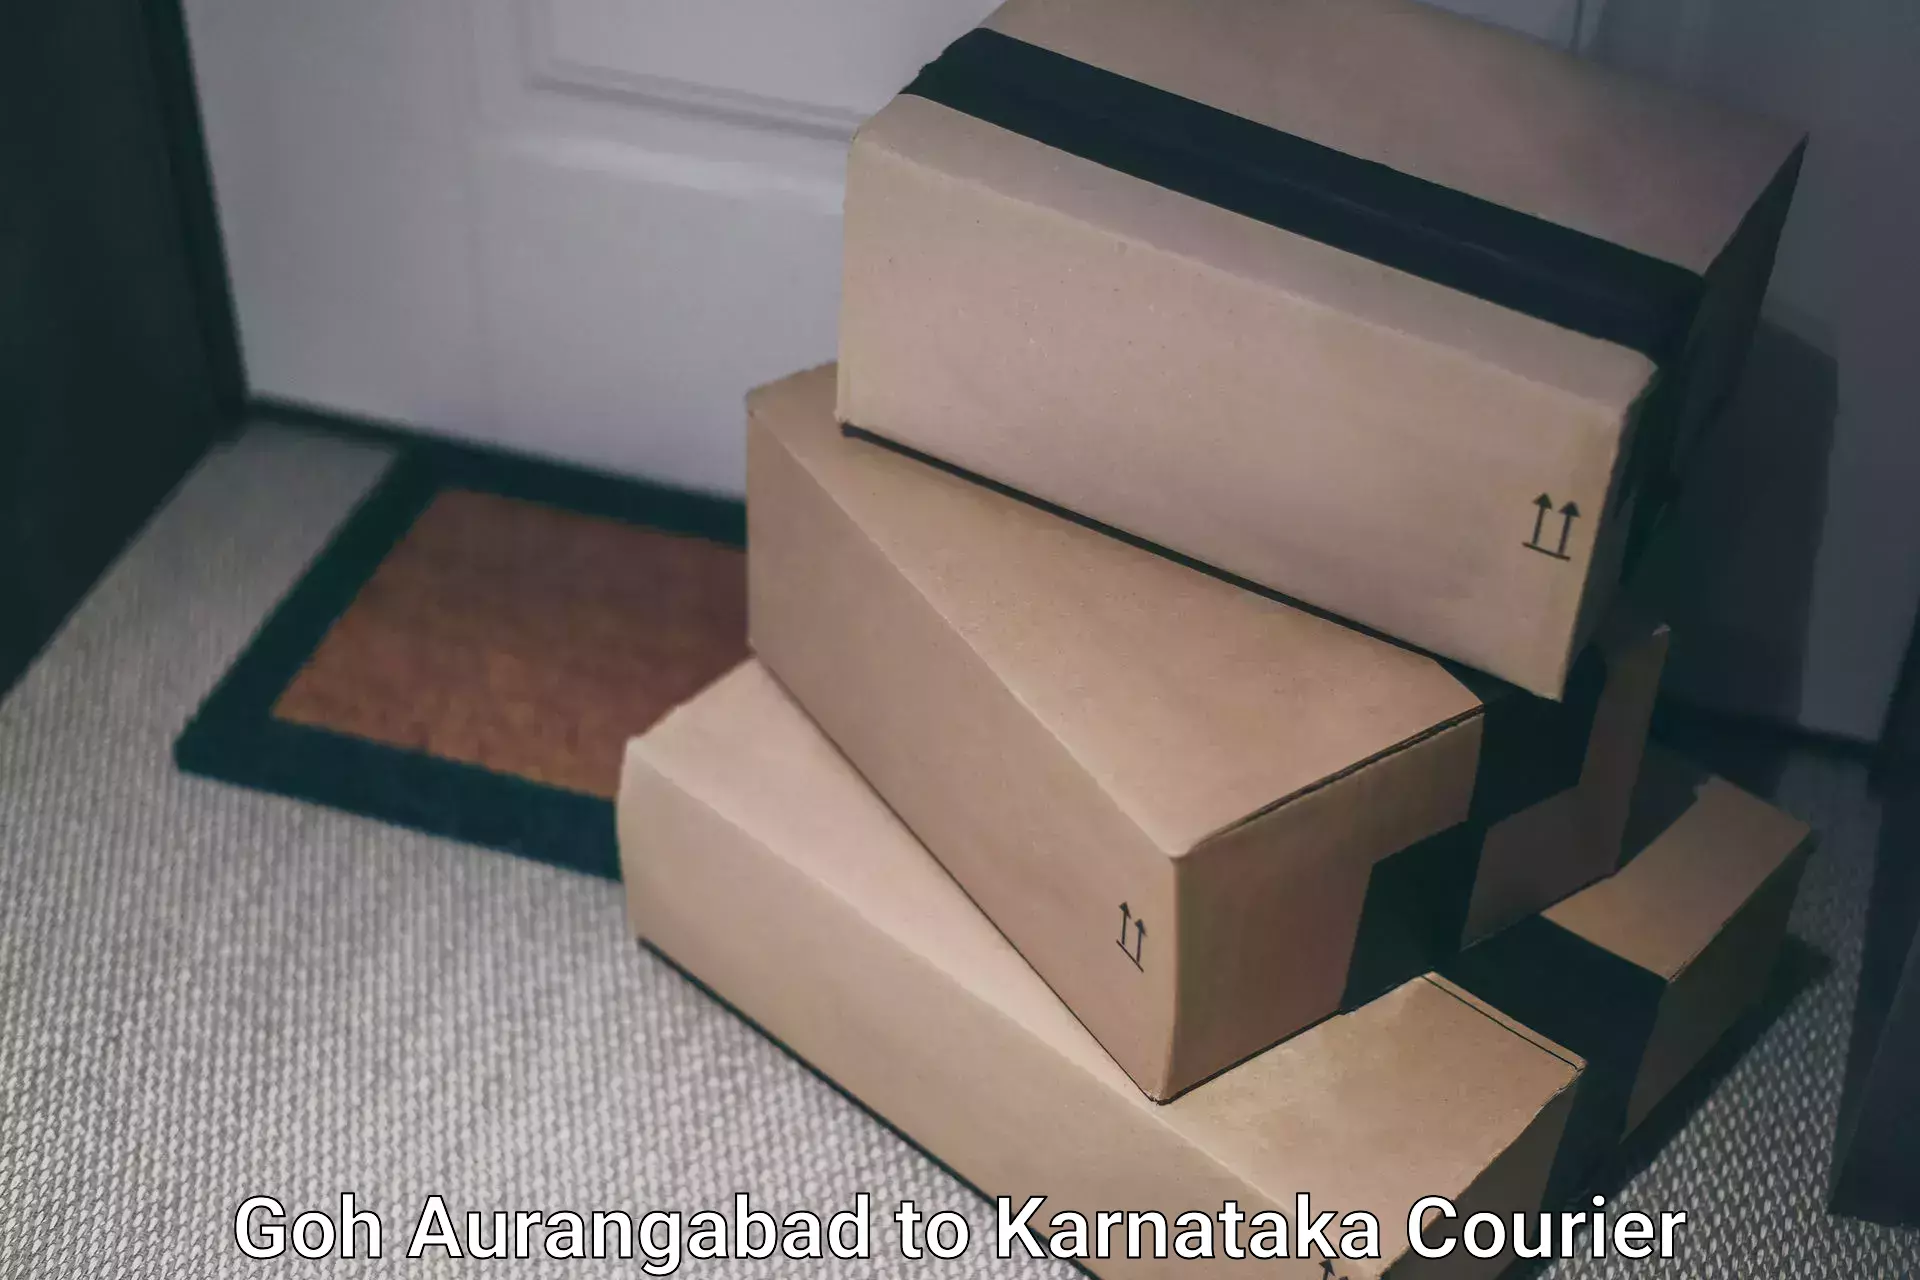 Global shipping networks Goh Aurangabad to Karnataka